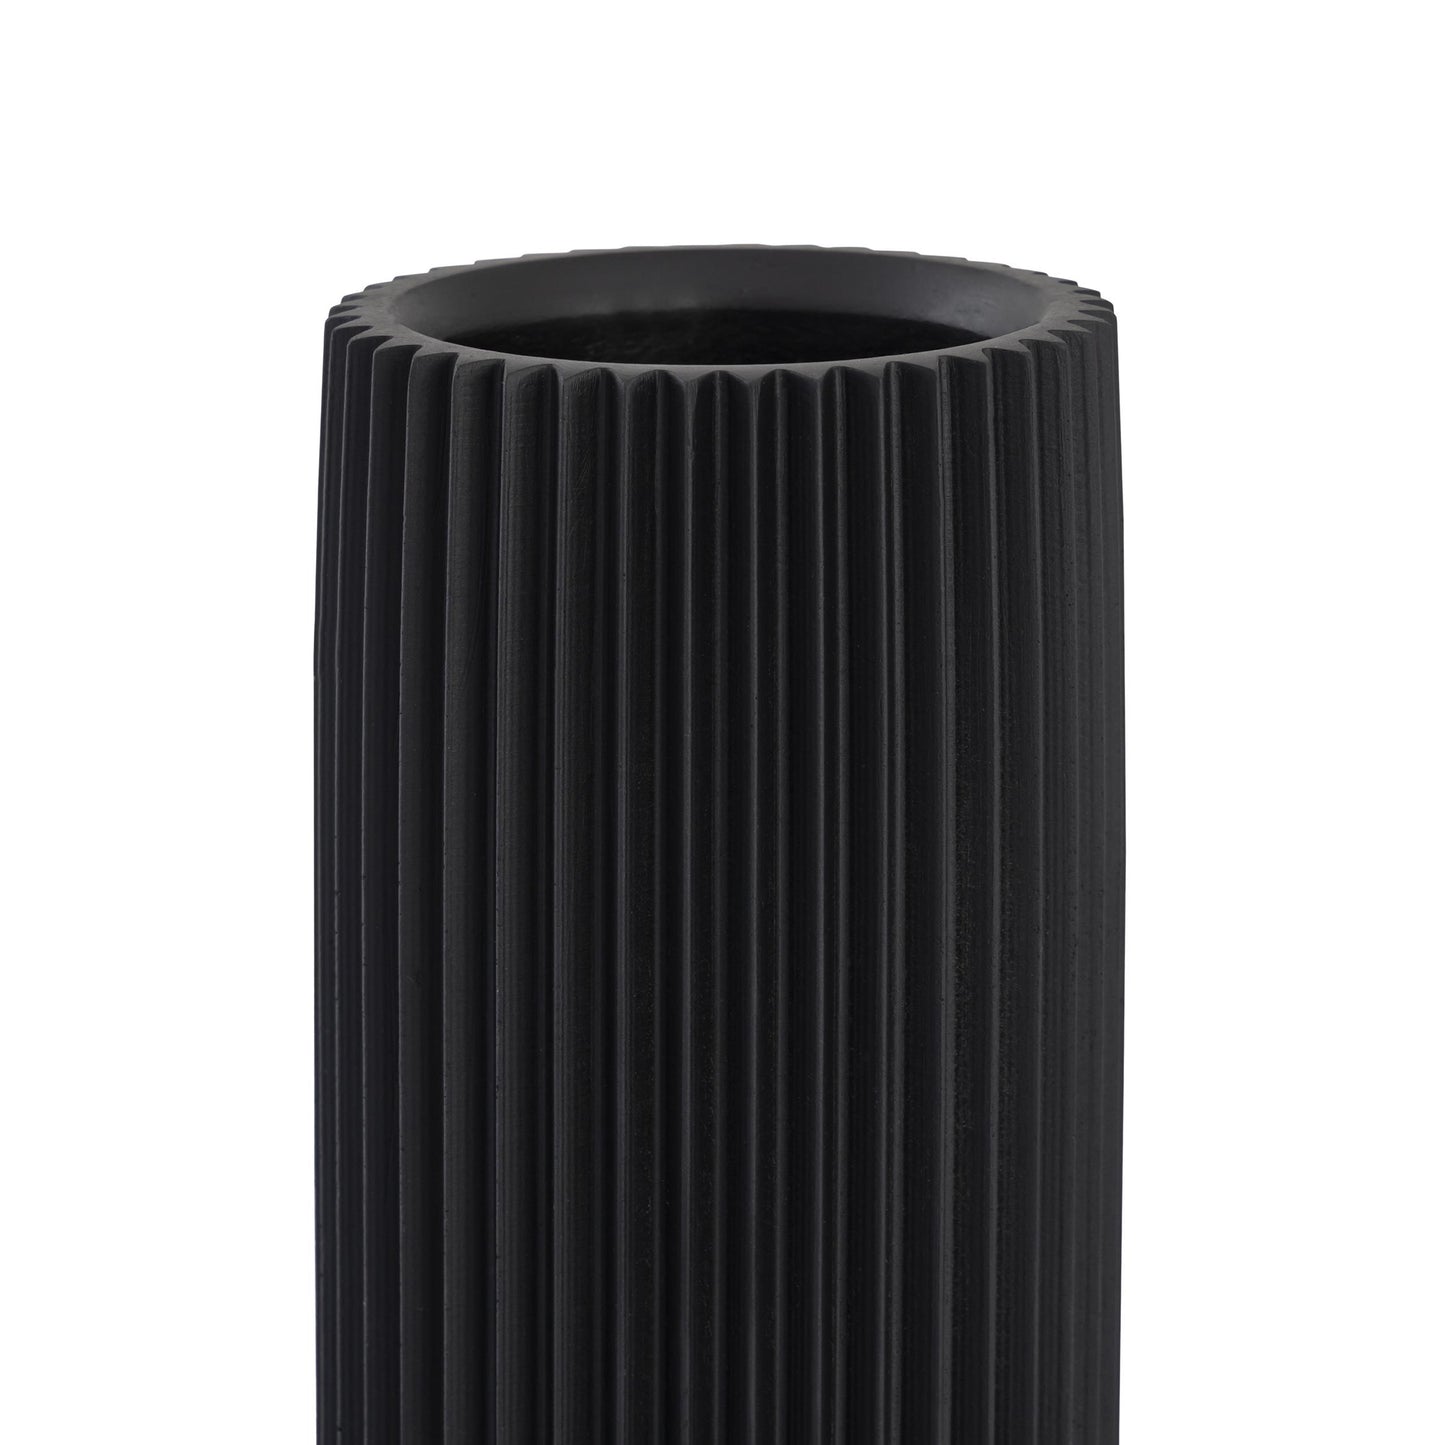 lips black concrete table vase